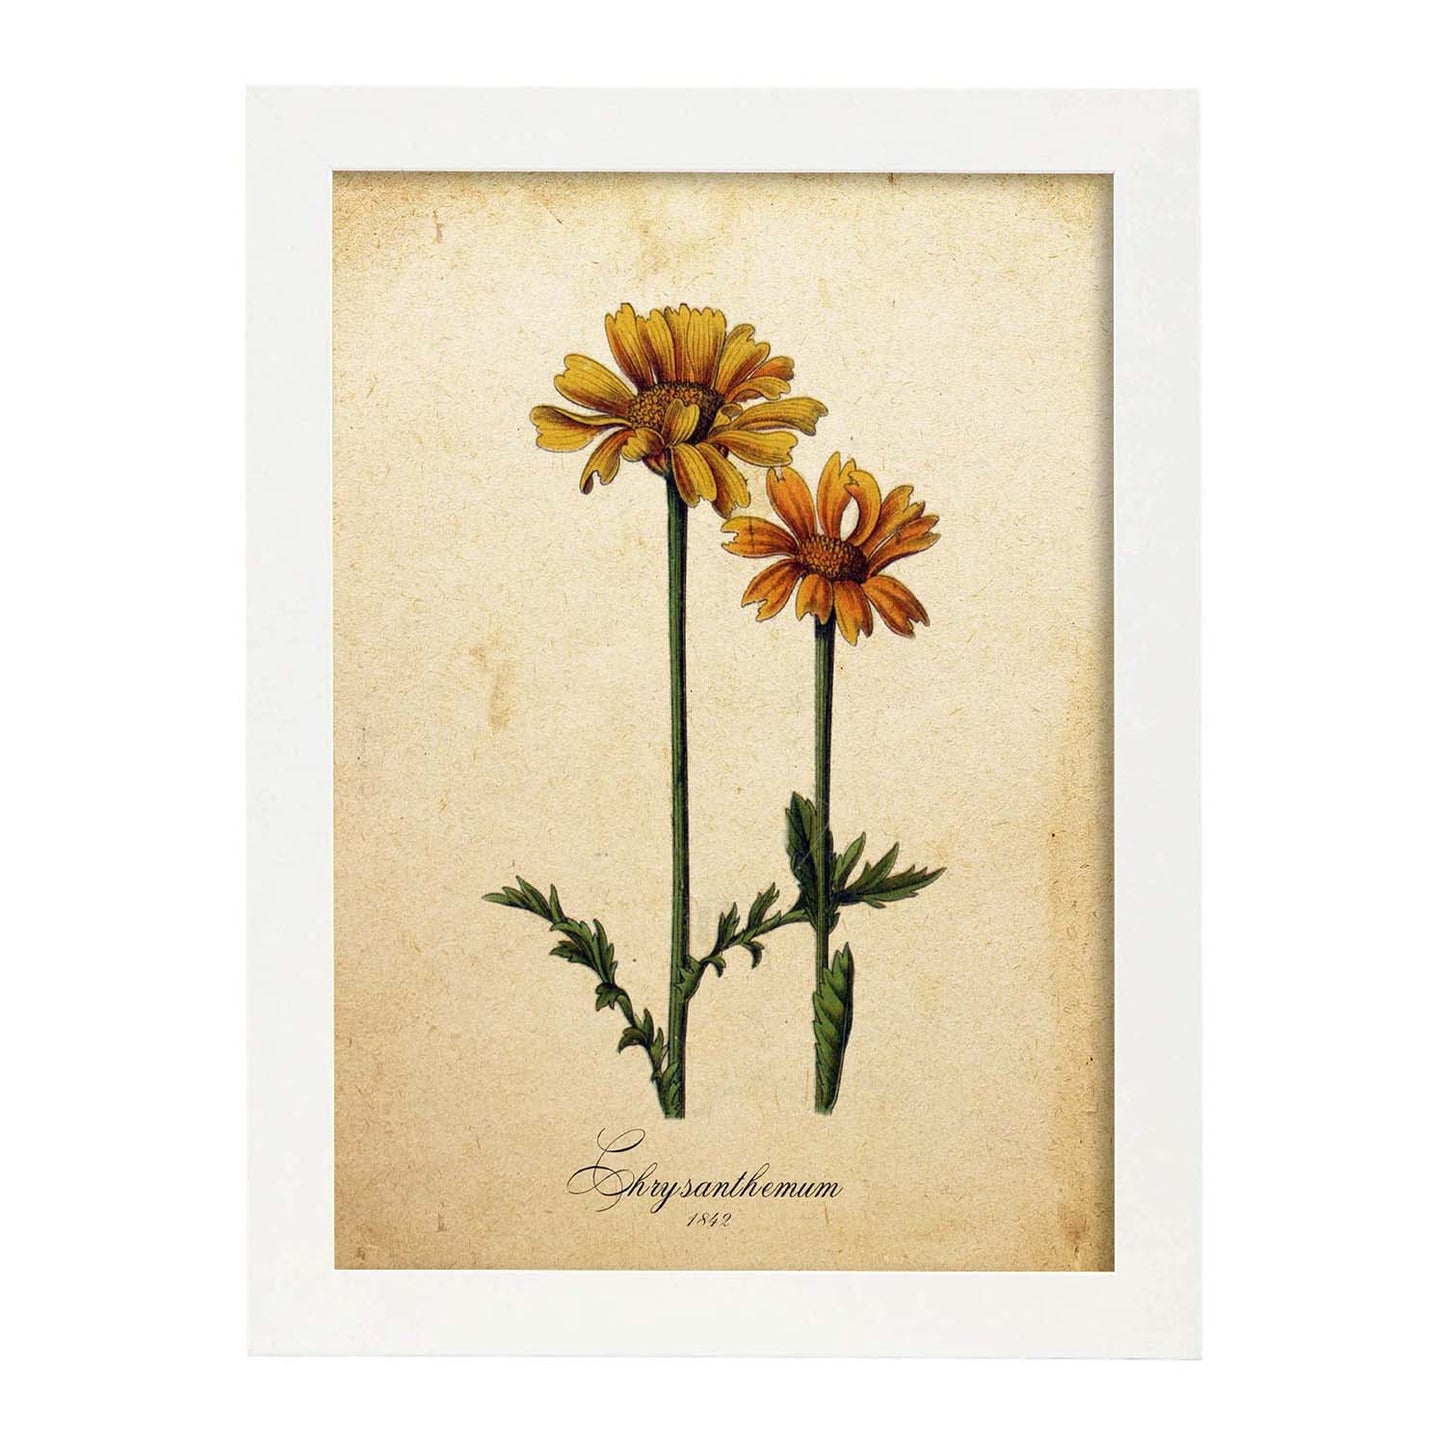 Poster de flores vintage. Lámina Chrysanthemum con diseño vintage.-Artwork-Nacnic-A4-Marco Blanco-Nacnic Estudio SL